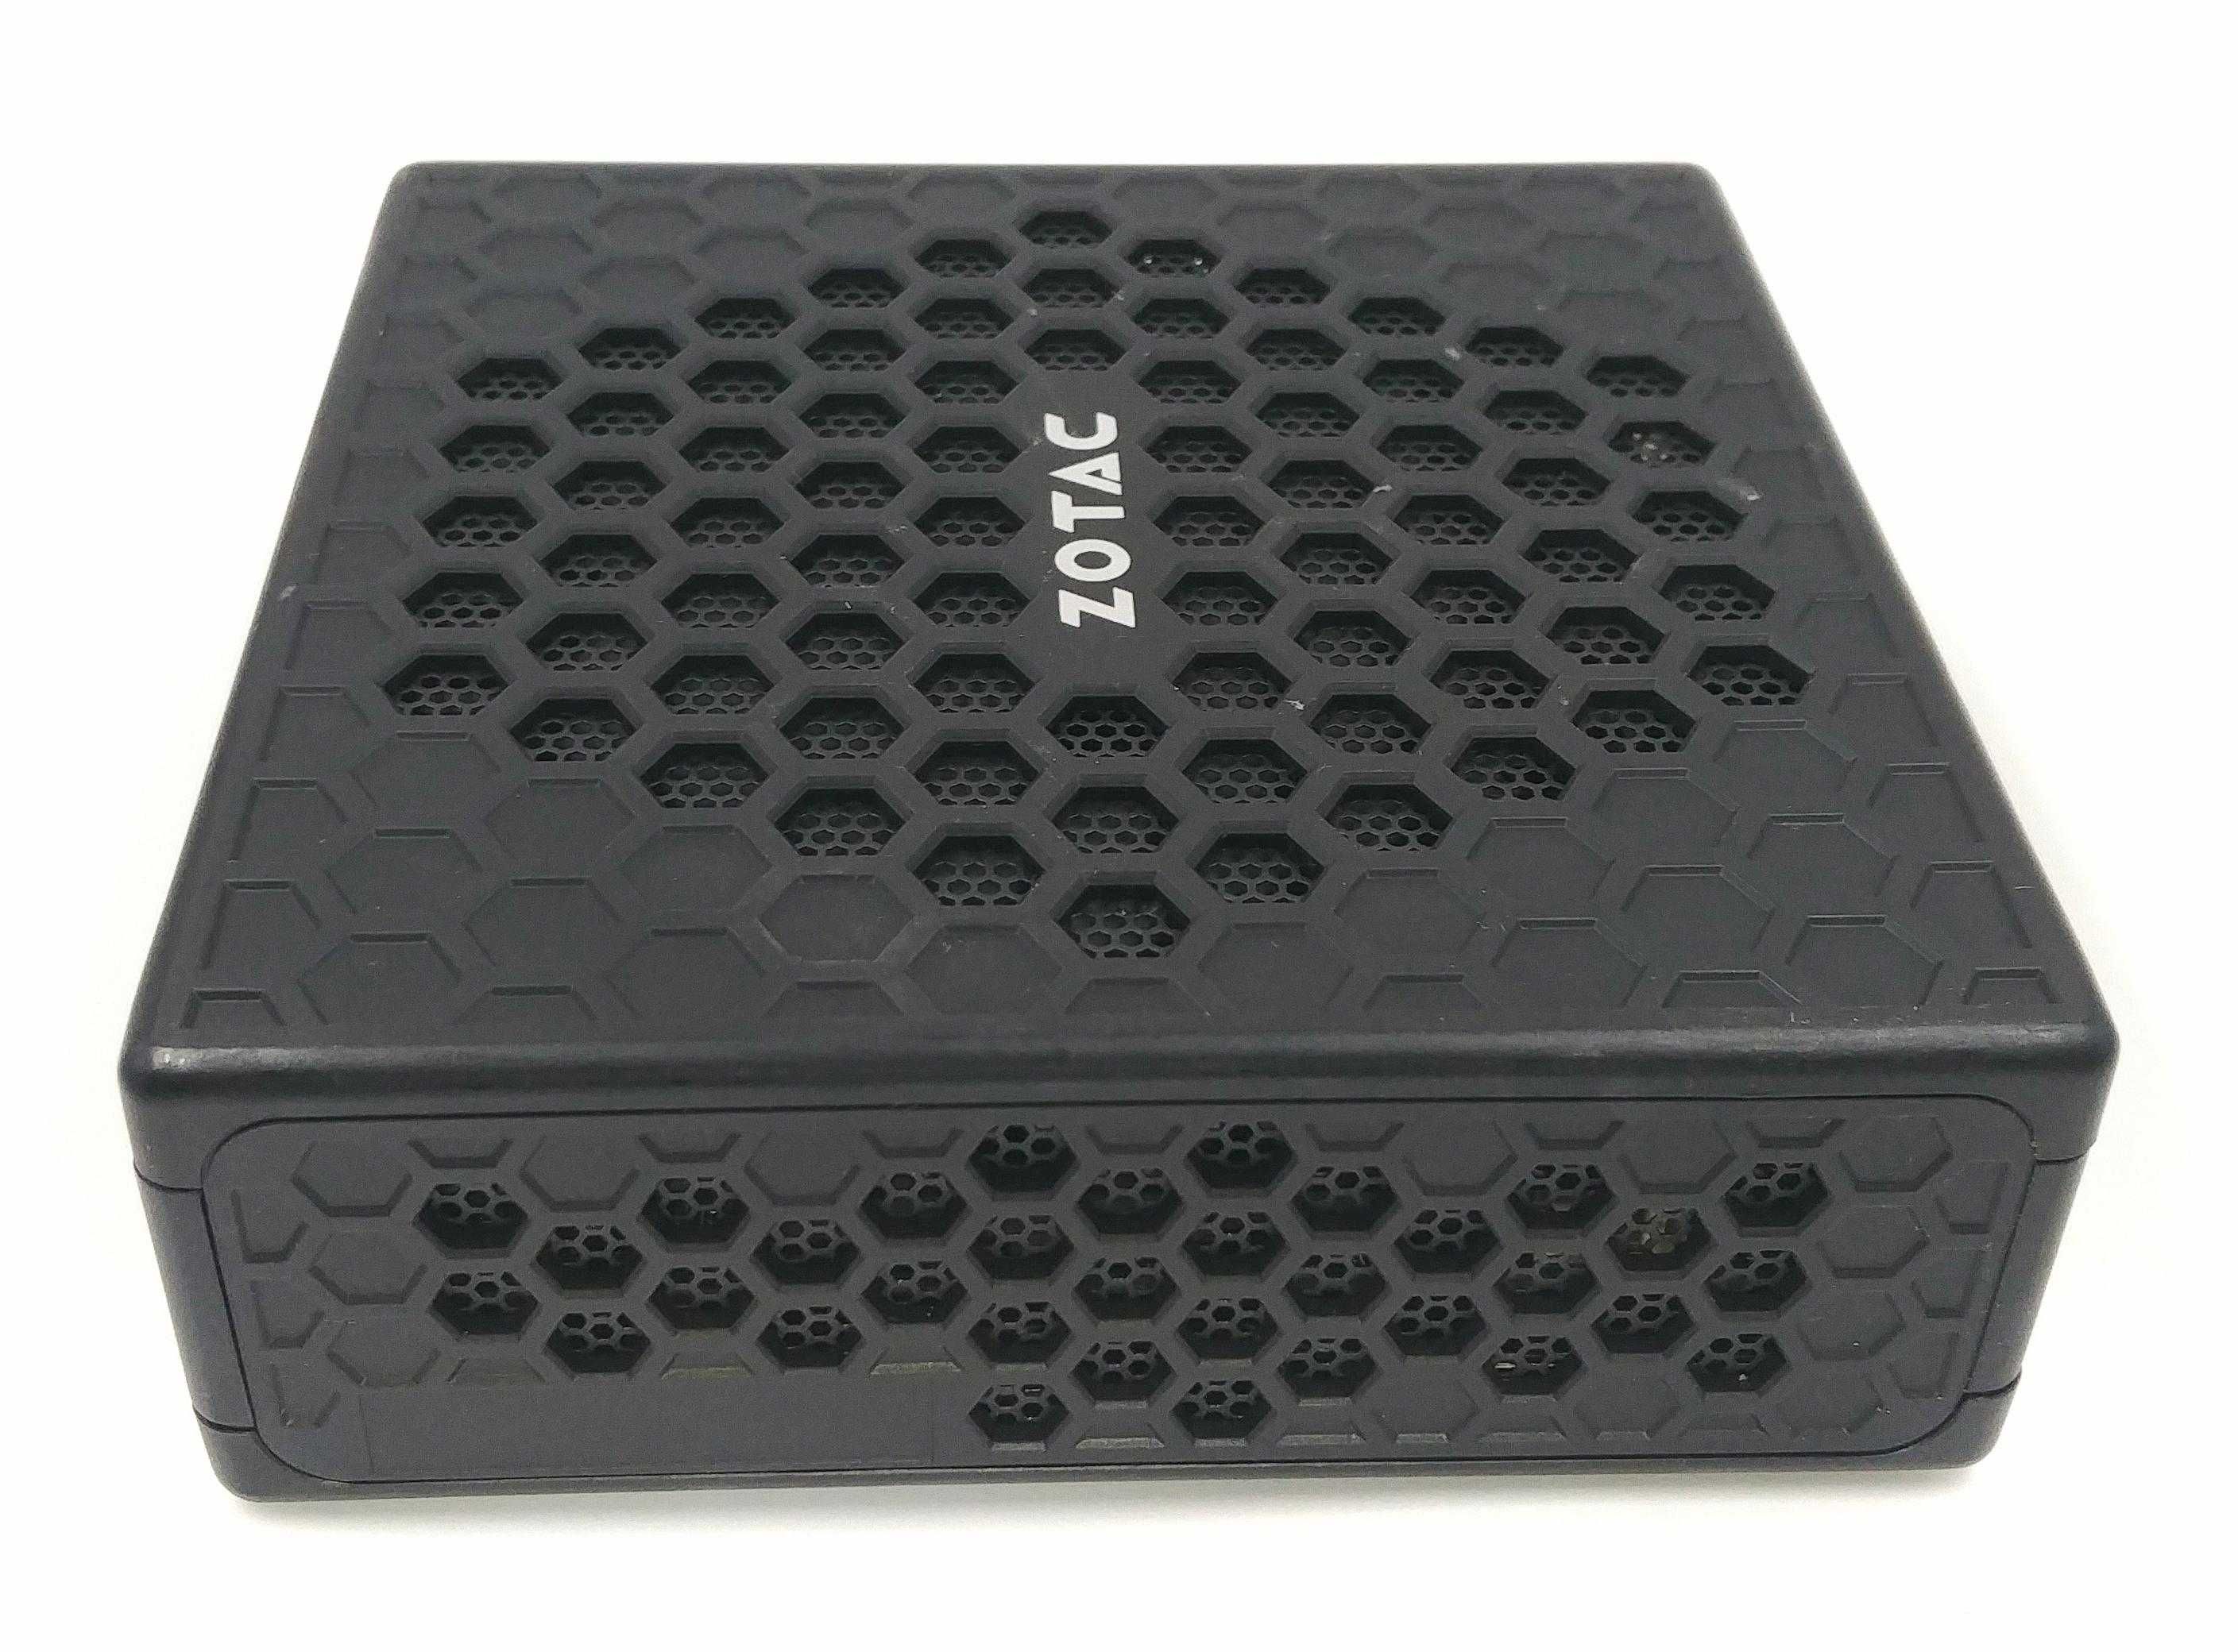 Безвентиляторный мини-пк Zotac Zbox cl320 4 ядра, 4gb DDR3, Wi-Fi, BT